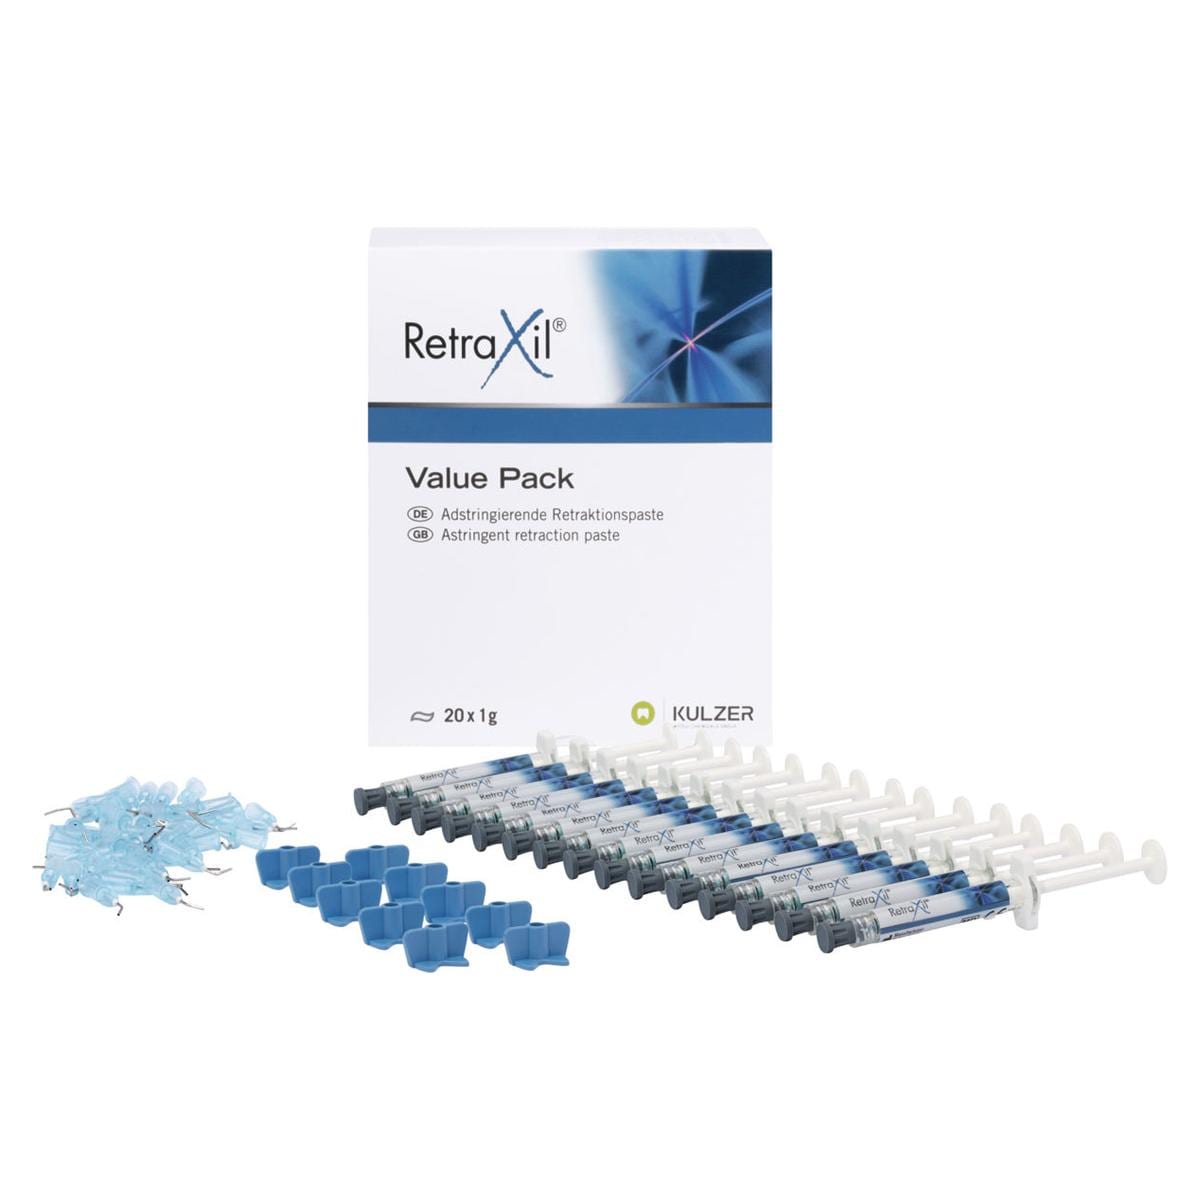 RetraXil - Value Pack - 20x 1 g spuiten en toebehoren